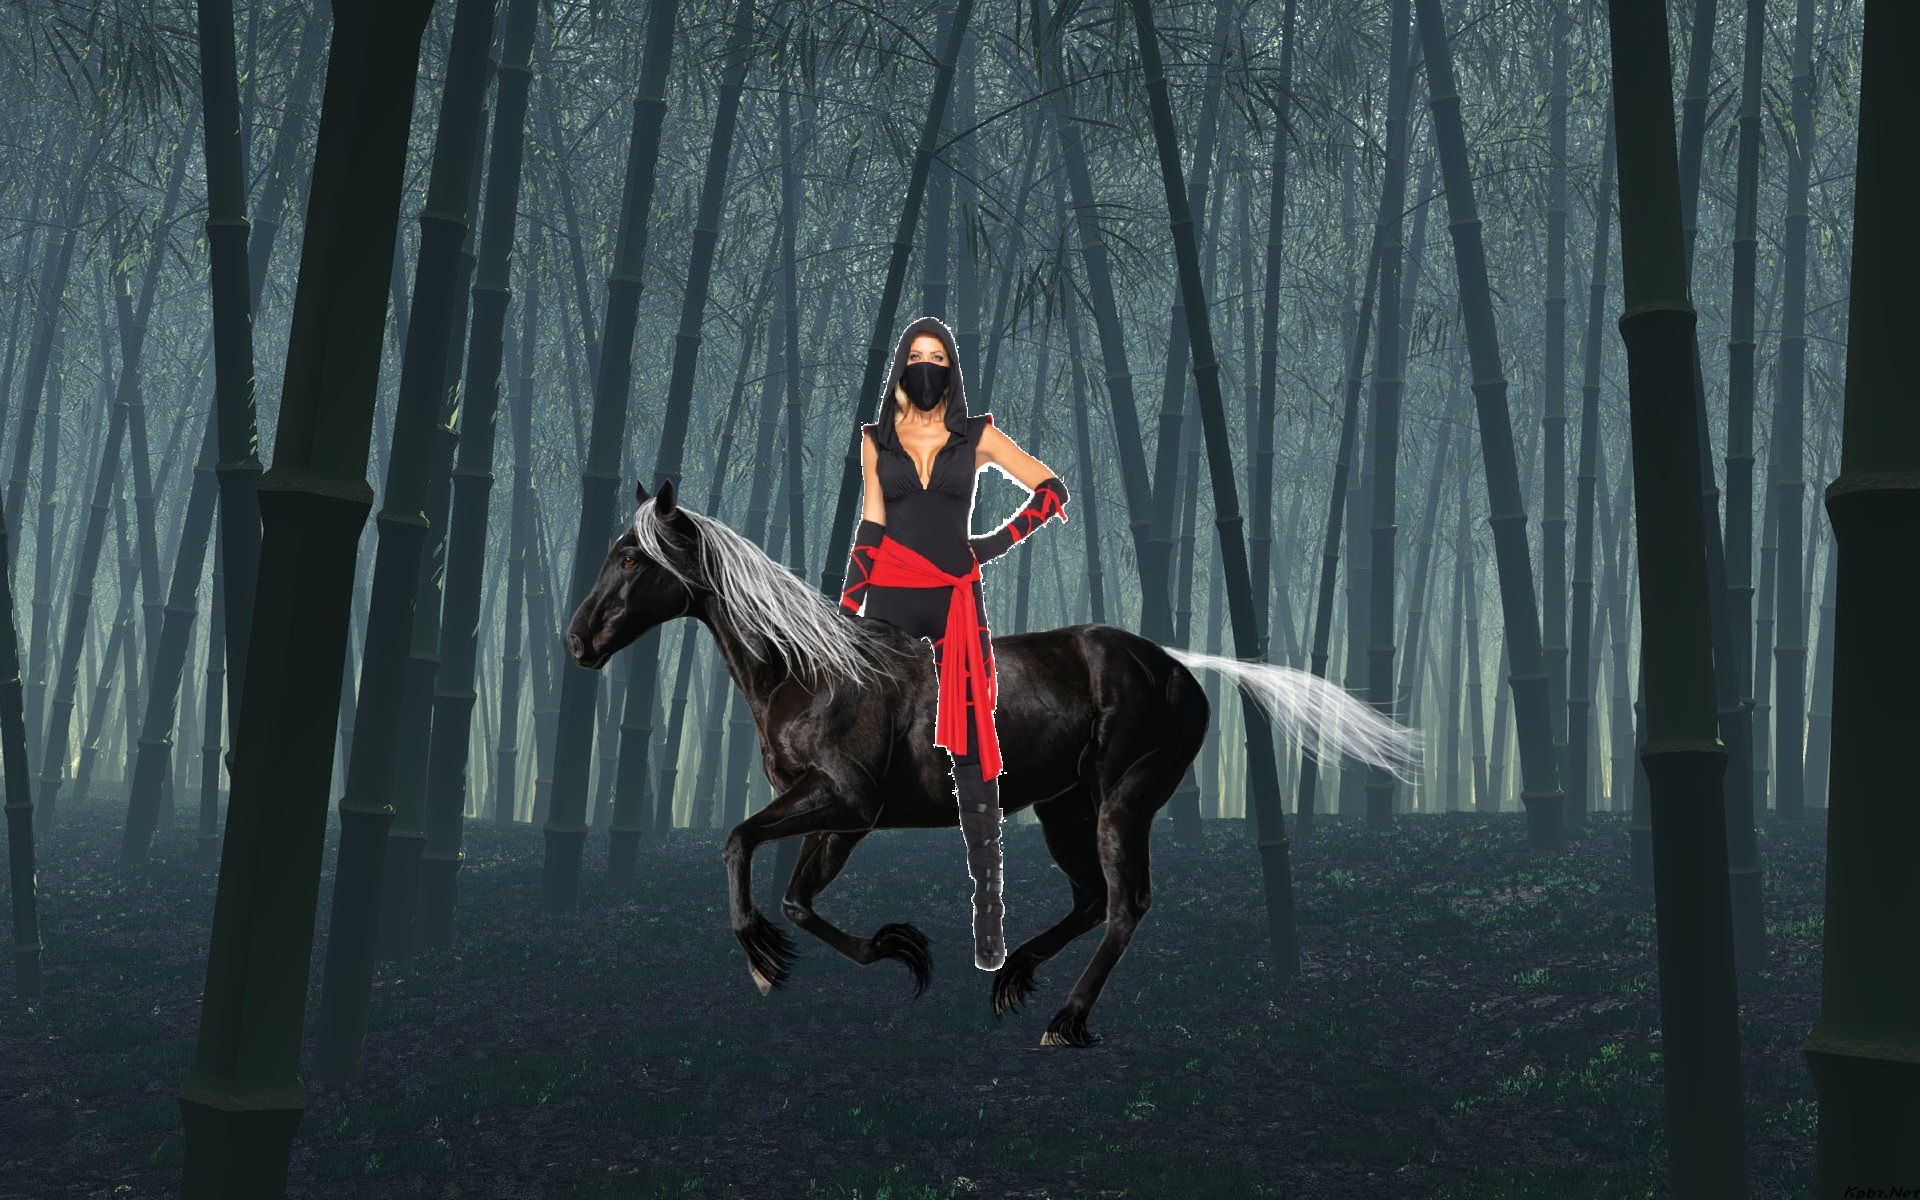 A Hot Kunoichi riding her beautiful black steed at night